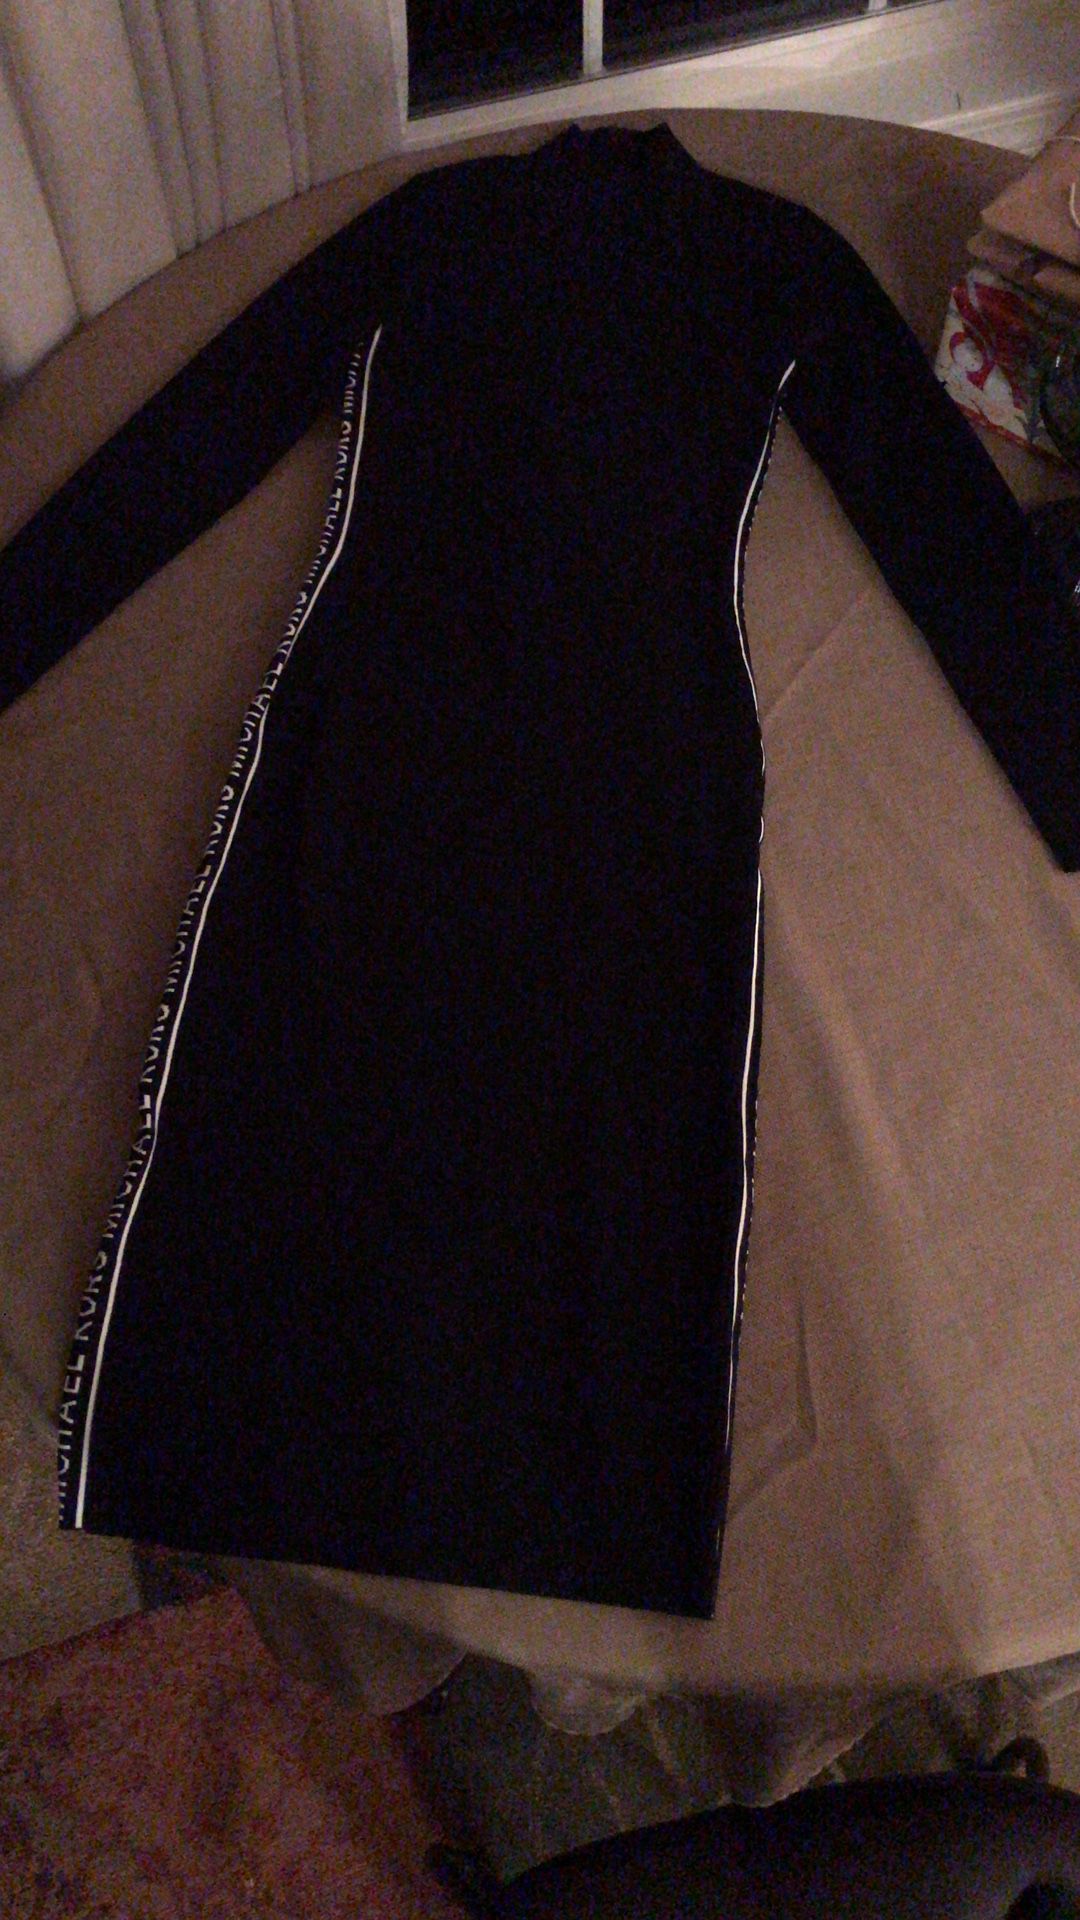 Brand new Michael Kors signature dress size M